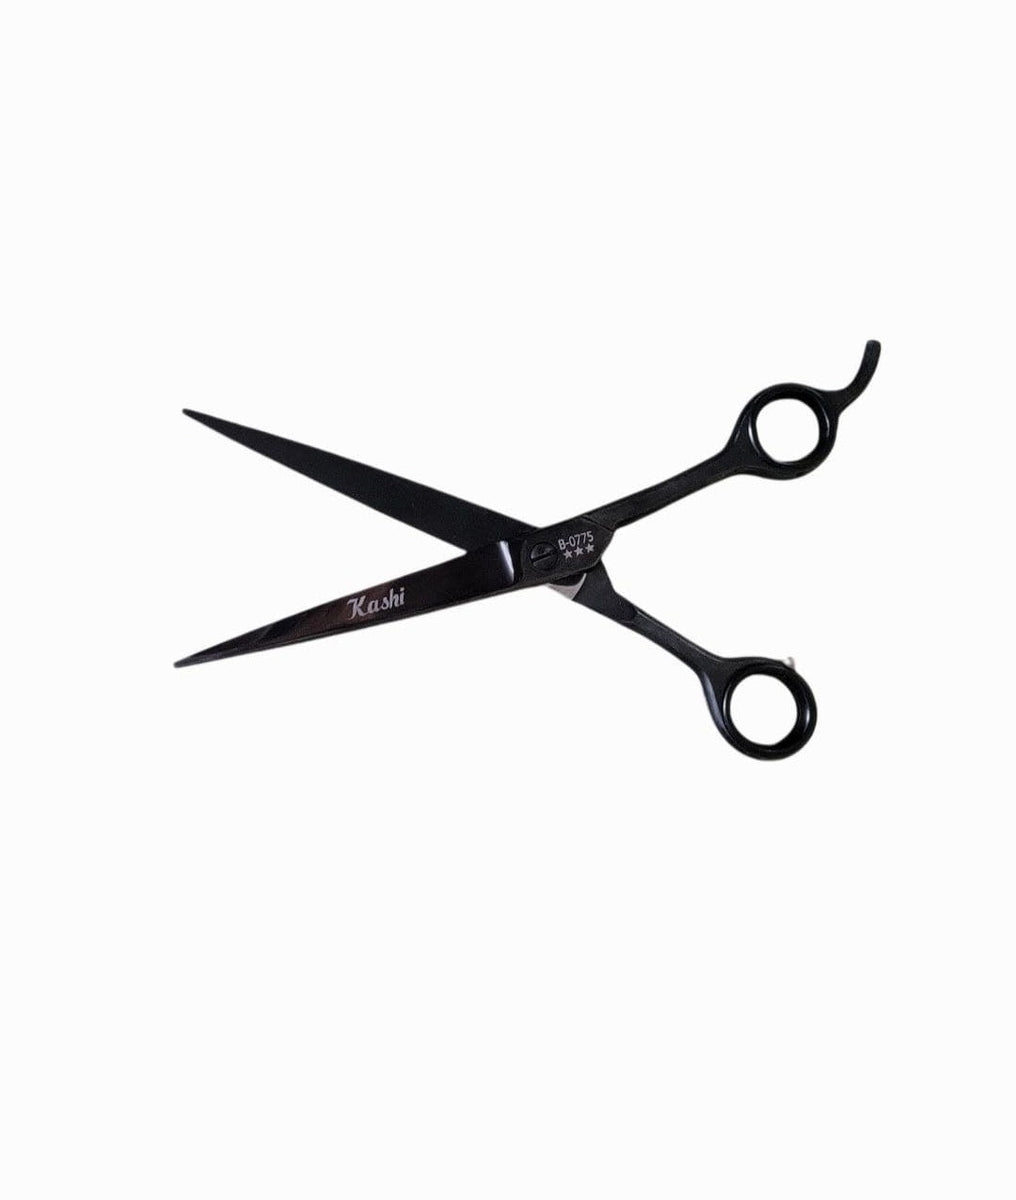 Kashira 5.7 Hair Scissors Hair Cutting Shears - Kissaki Shears